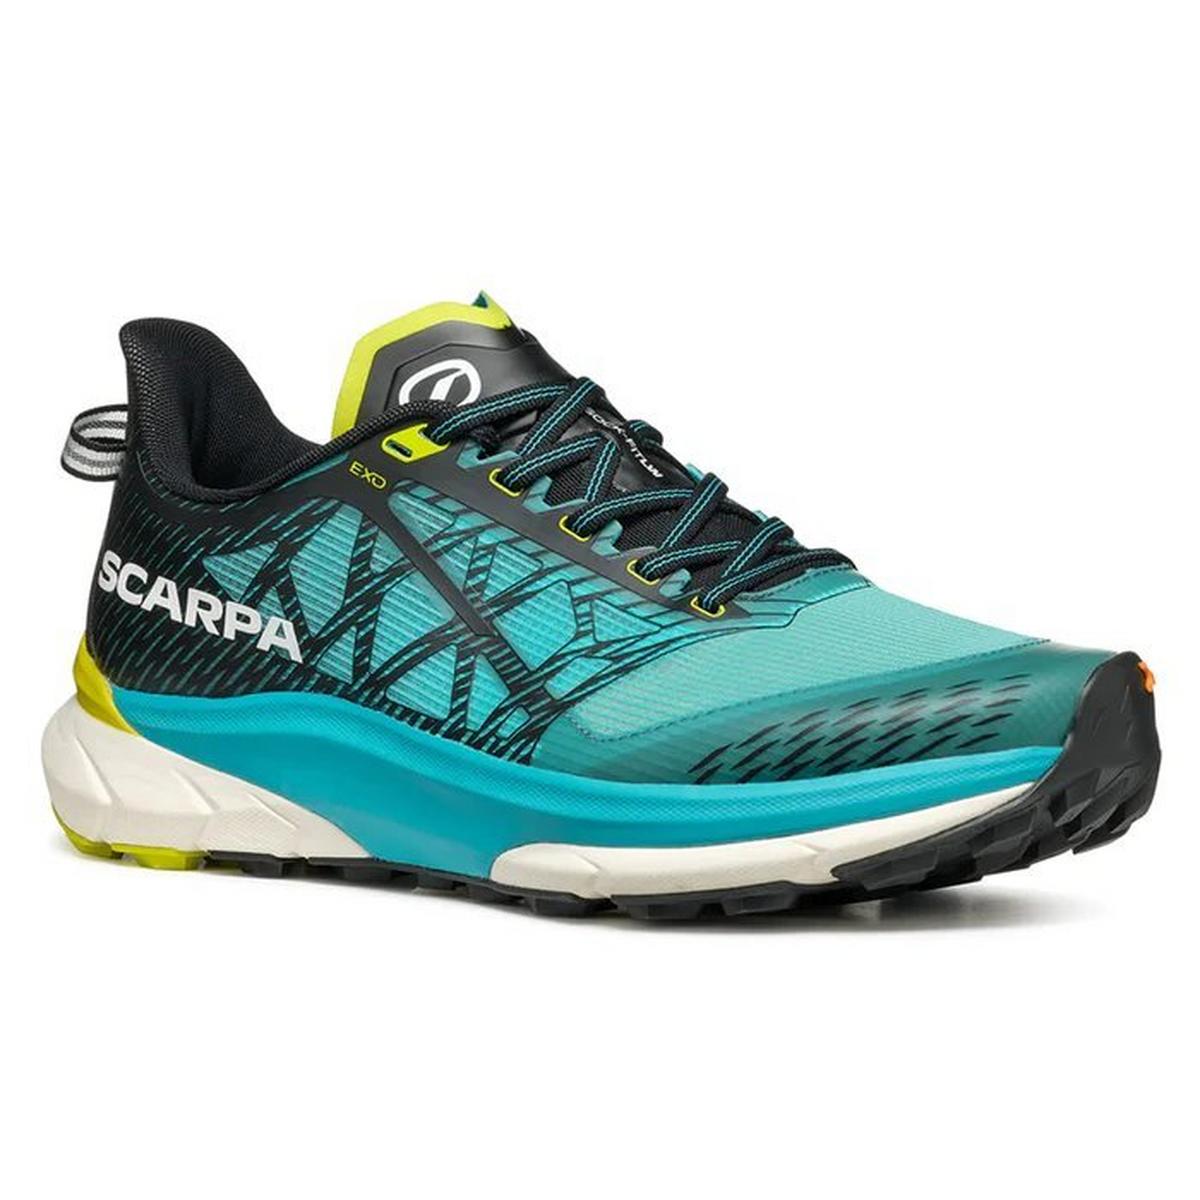 Scarpa Men's Golden Gate 2 Running Shoes - Azure Lime